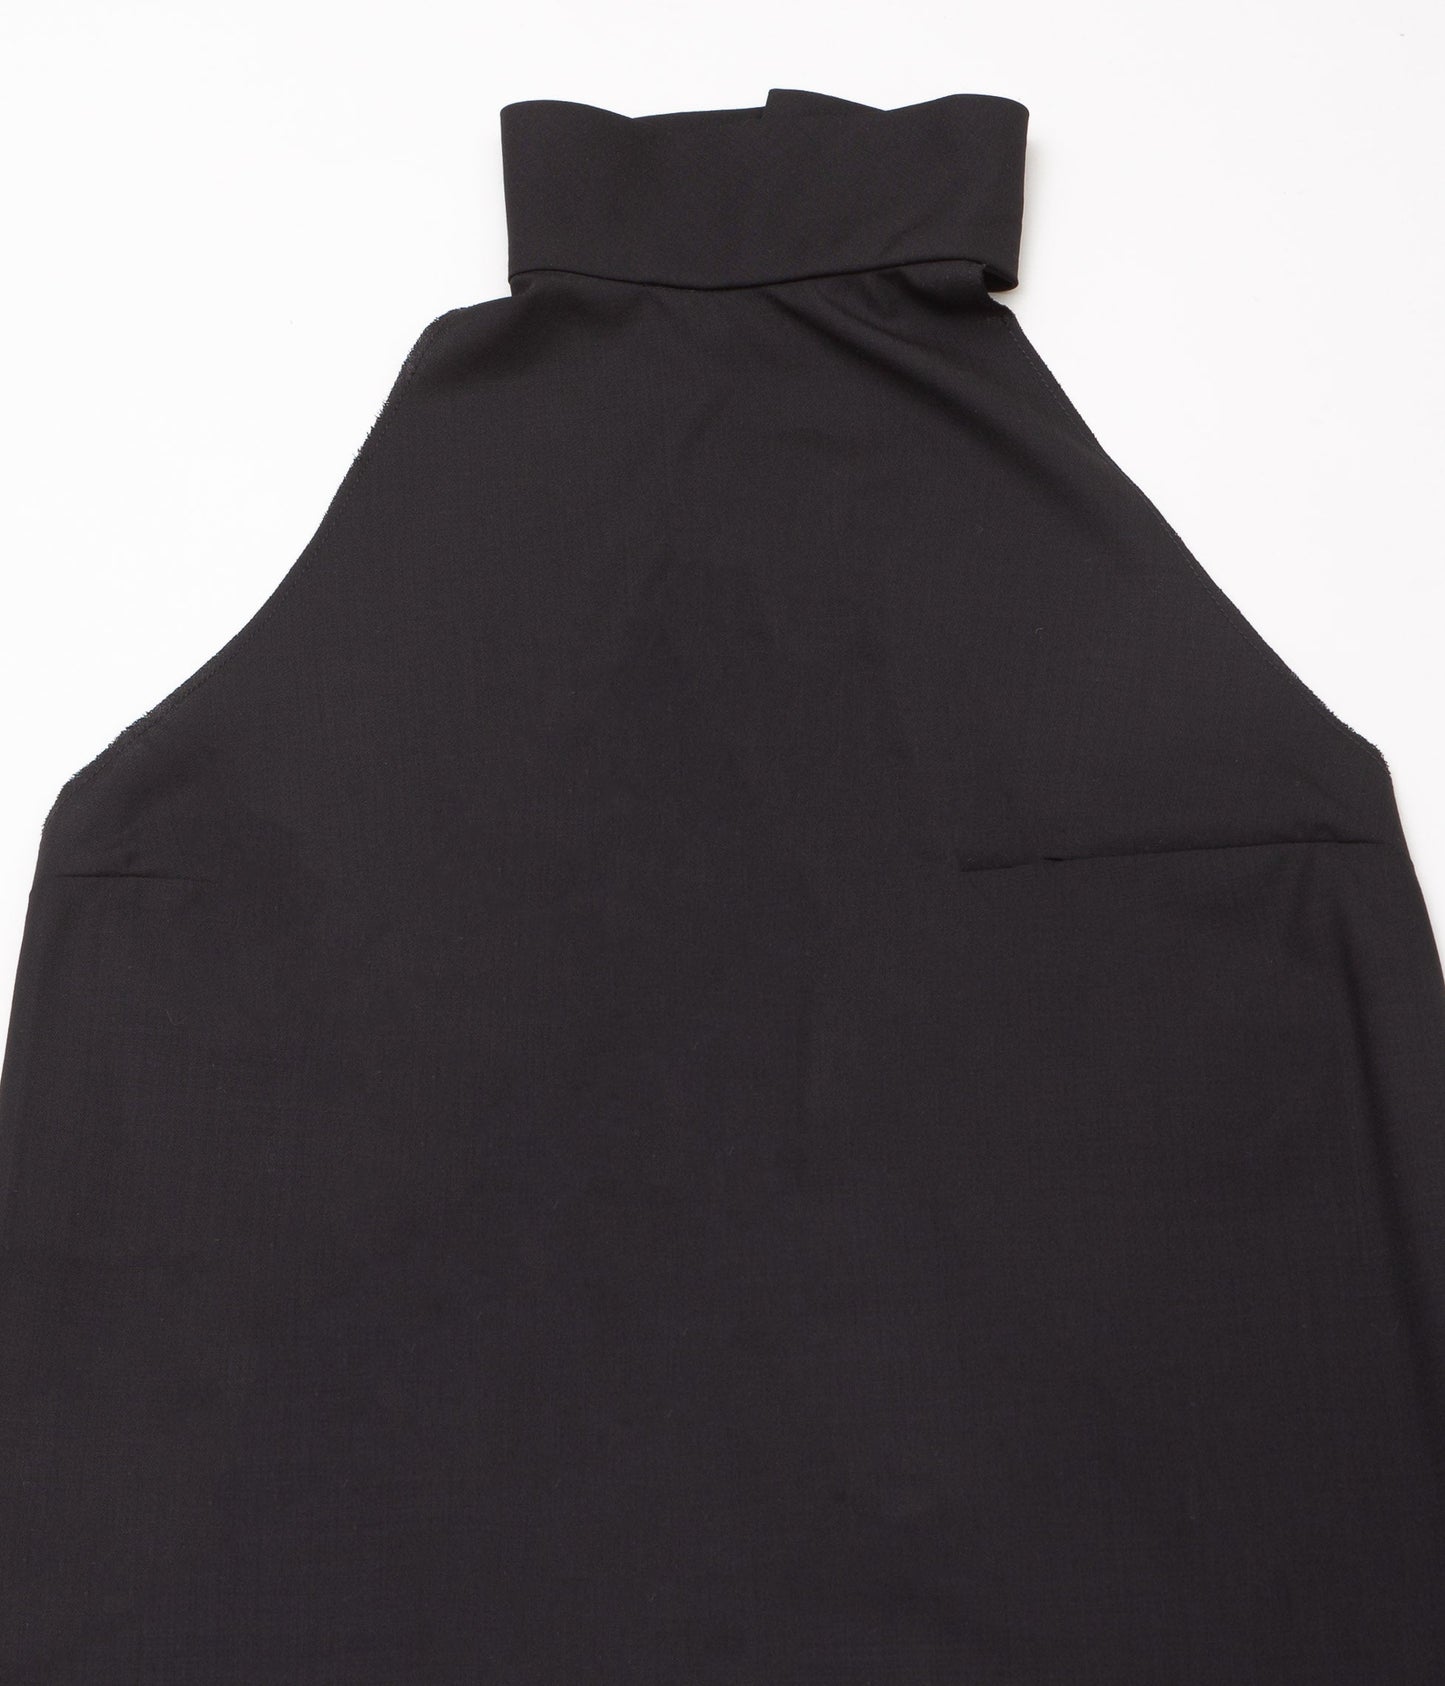 GABRIELA COLL GARMENTS "NO.36 LORO PIANA FINE WOOL HALTER DRESS"(BLACK)